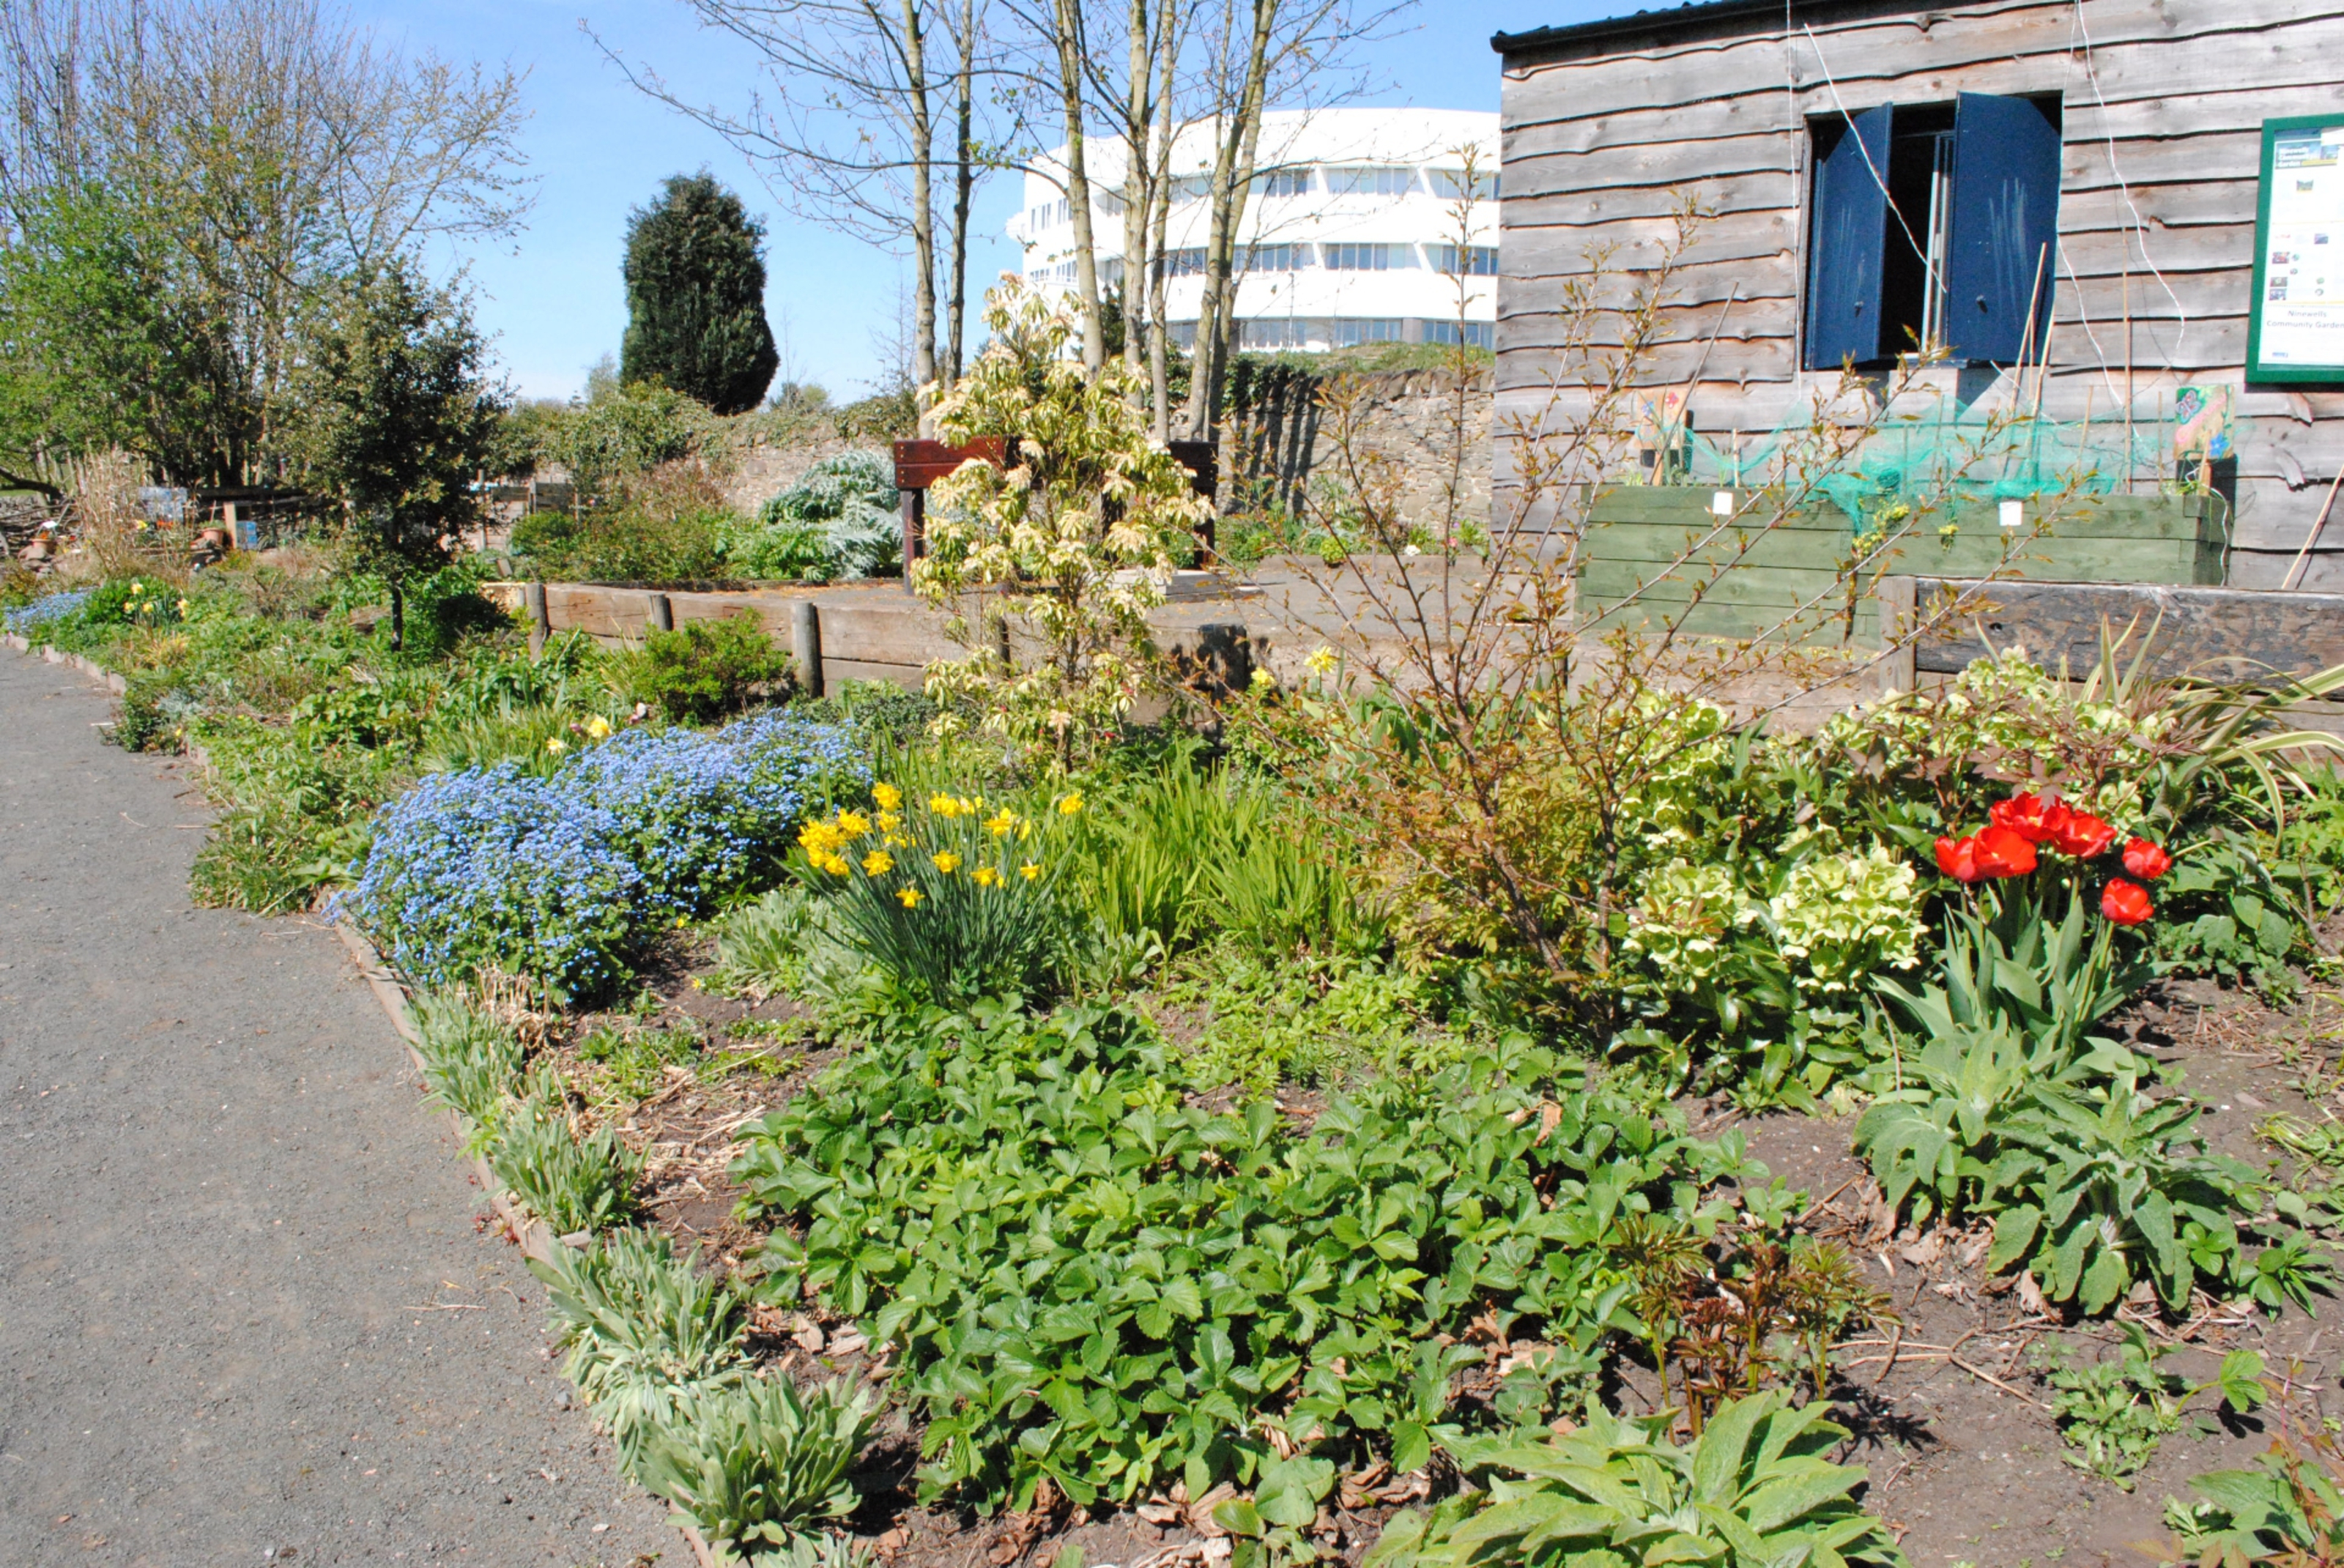 The Ninewells Community Garden